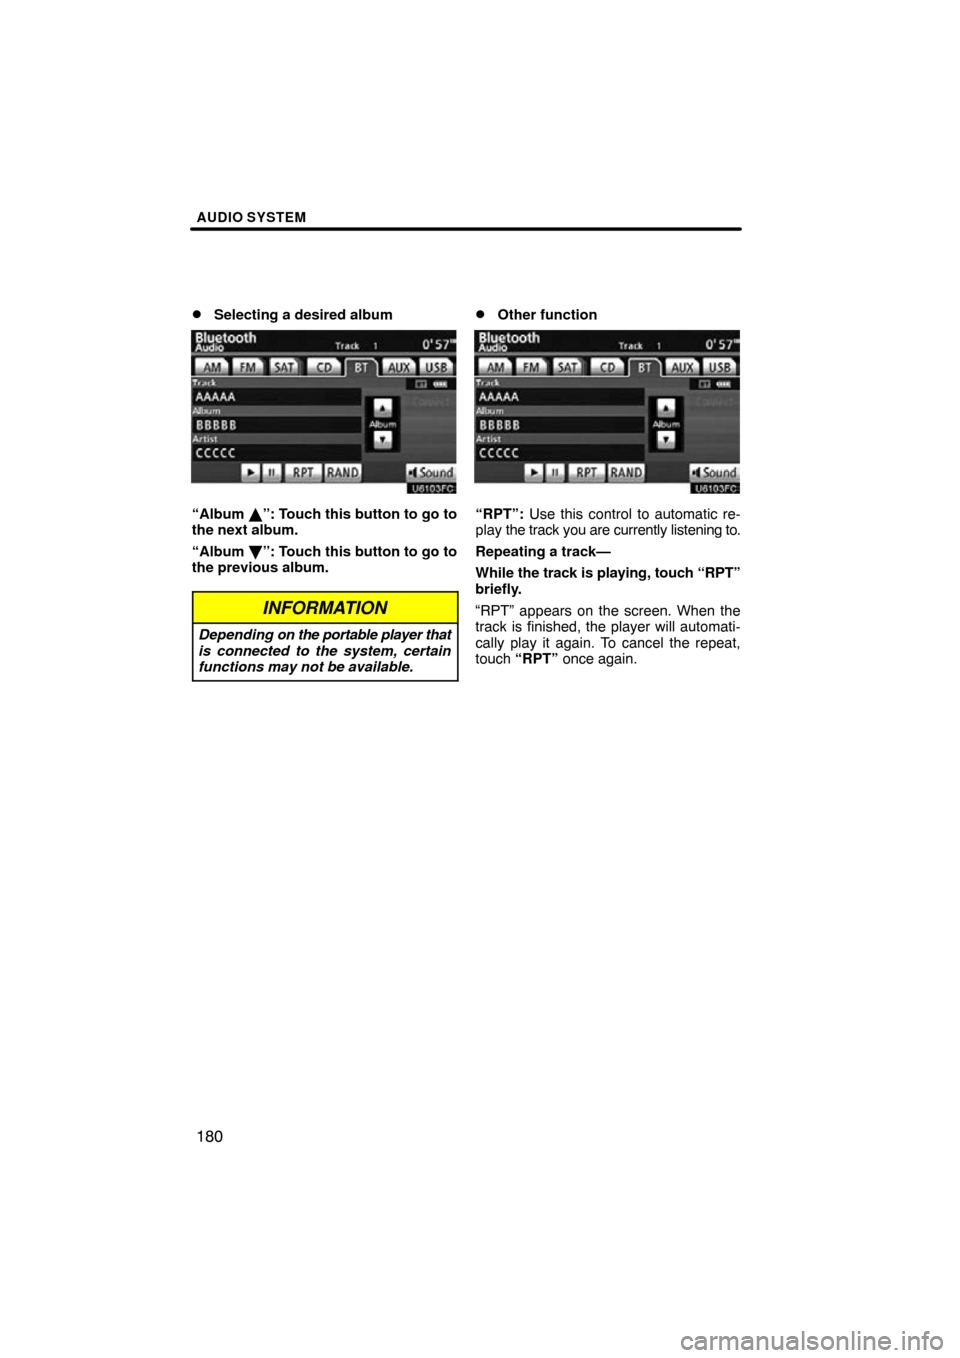 TOYOTA CAMRY 2010 XV40 / 8.G Navigation Manual AUDIO SYSTEM
180

Selecting a desired album
“Album 
”: Touch this button to go to
the next album.
“Album  \b”: Touch this button to go to
the previous album.
INFORMATION
Depending on the por